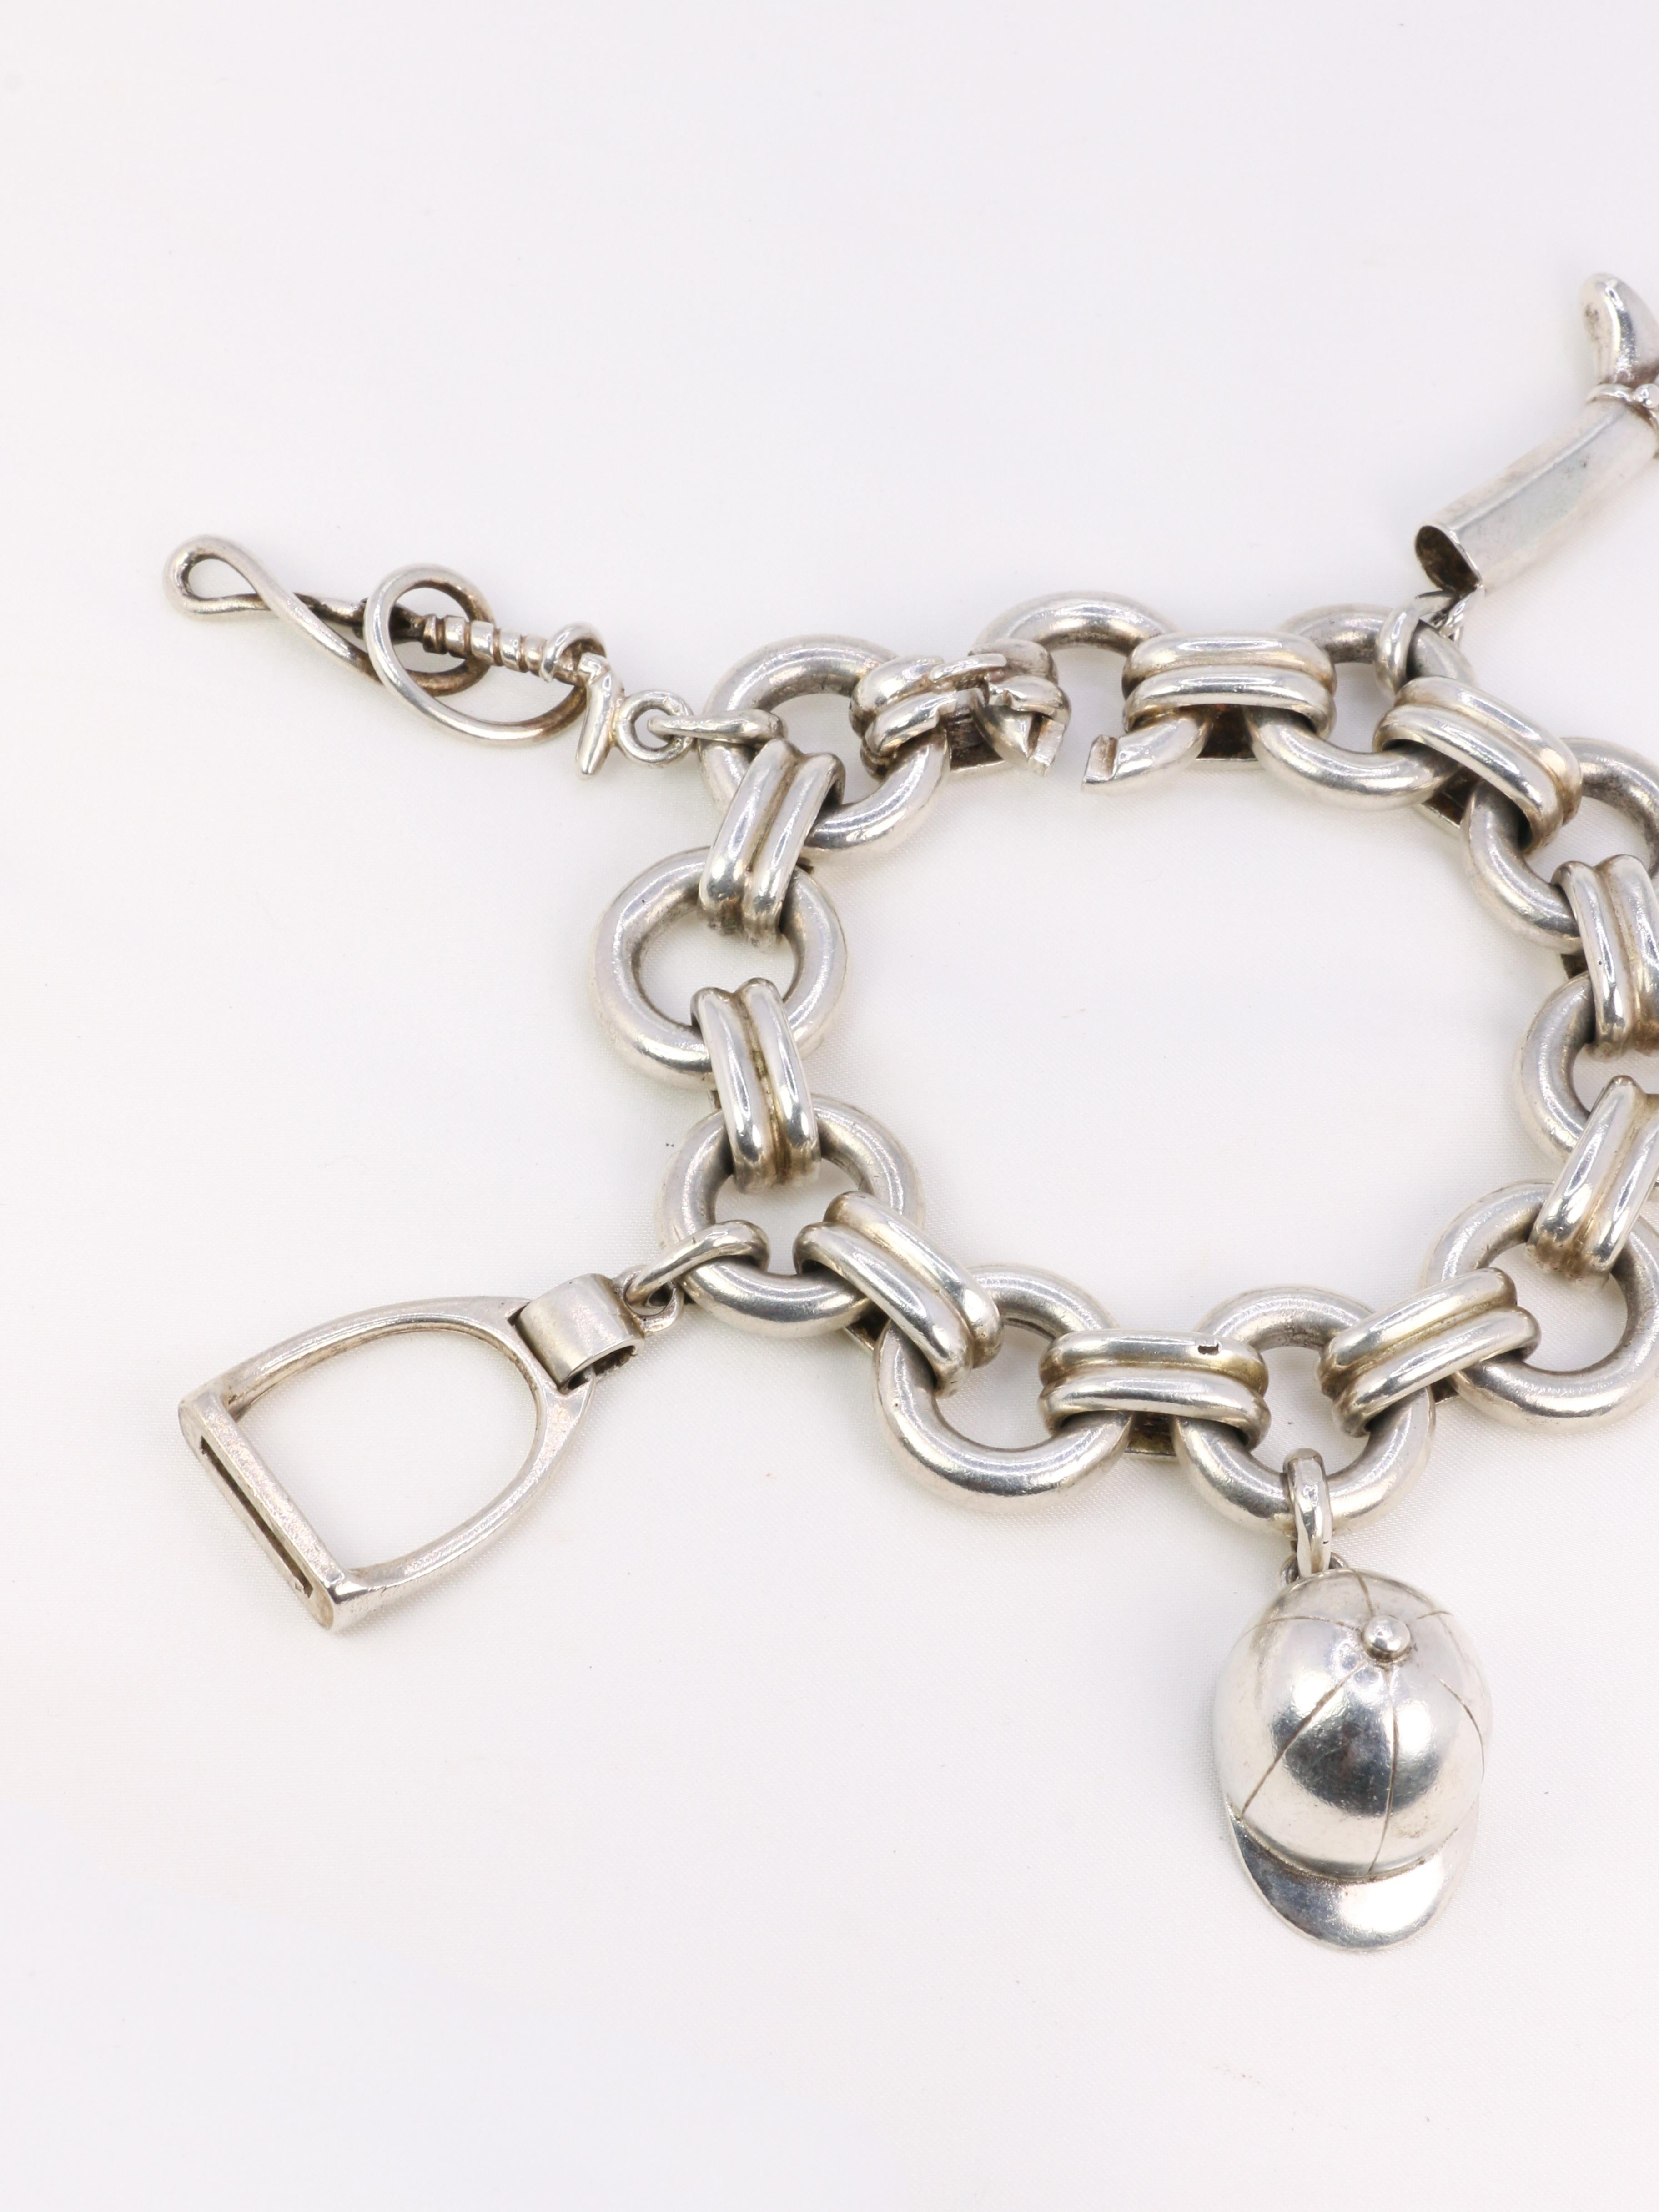 Gaétan de Percin (att. to HERMES) Silver bracelet and equestrian charms  For Sale 1